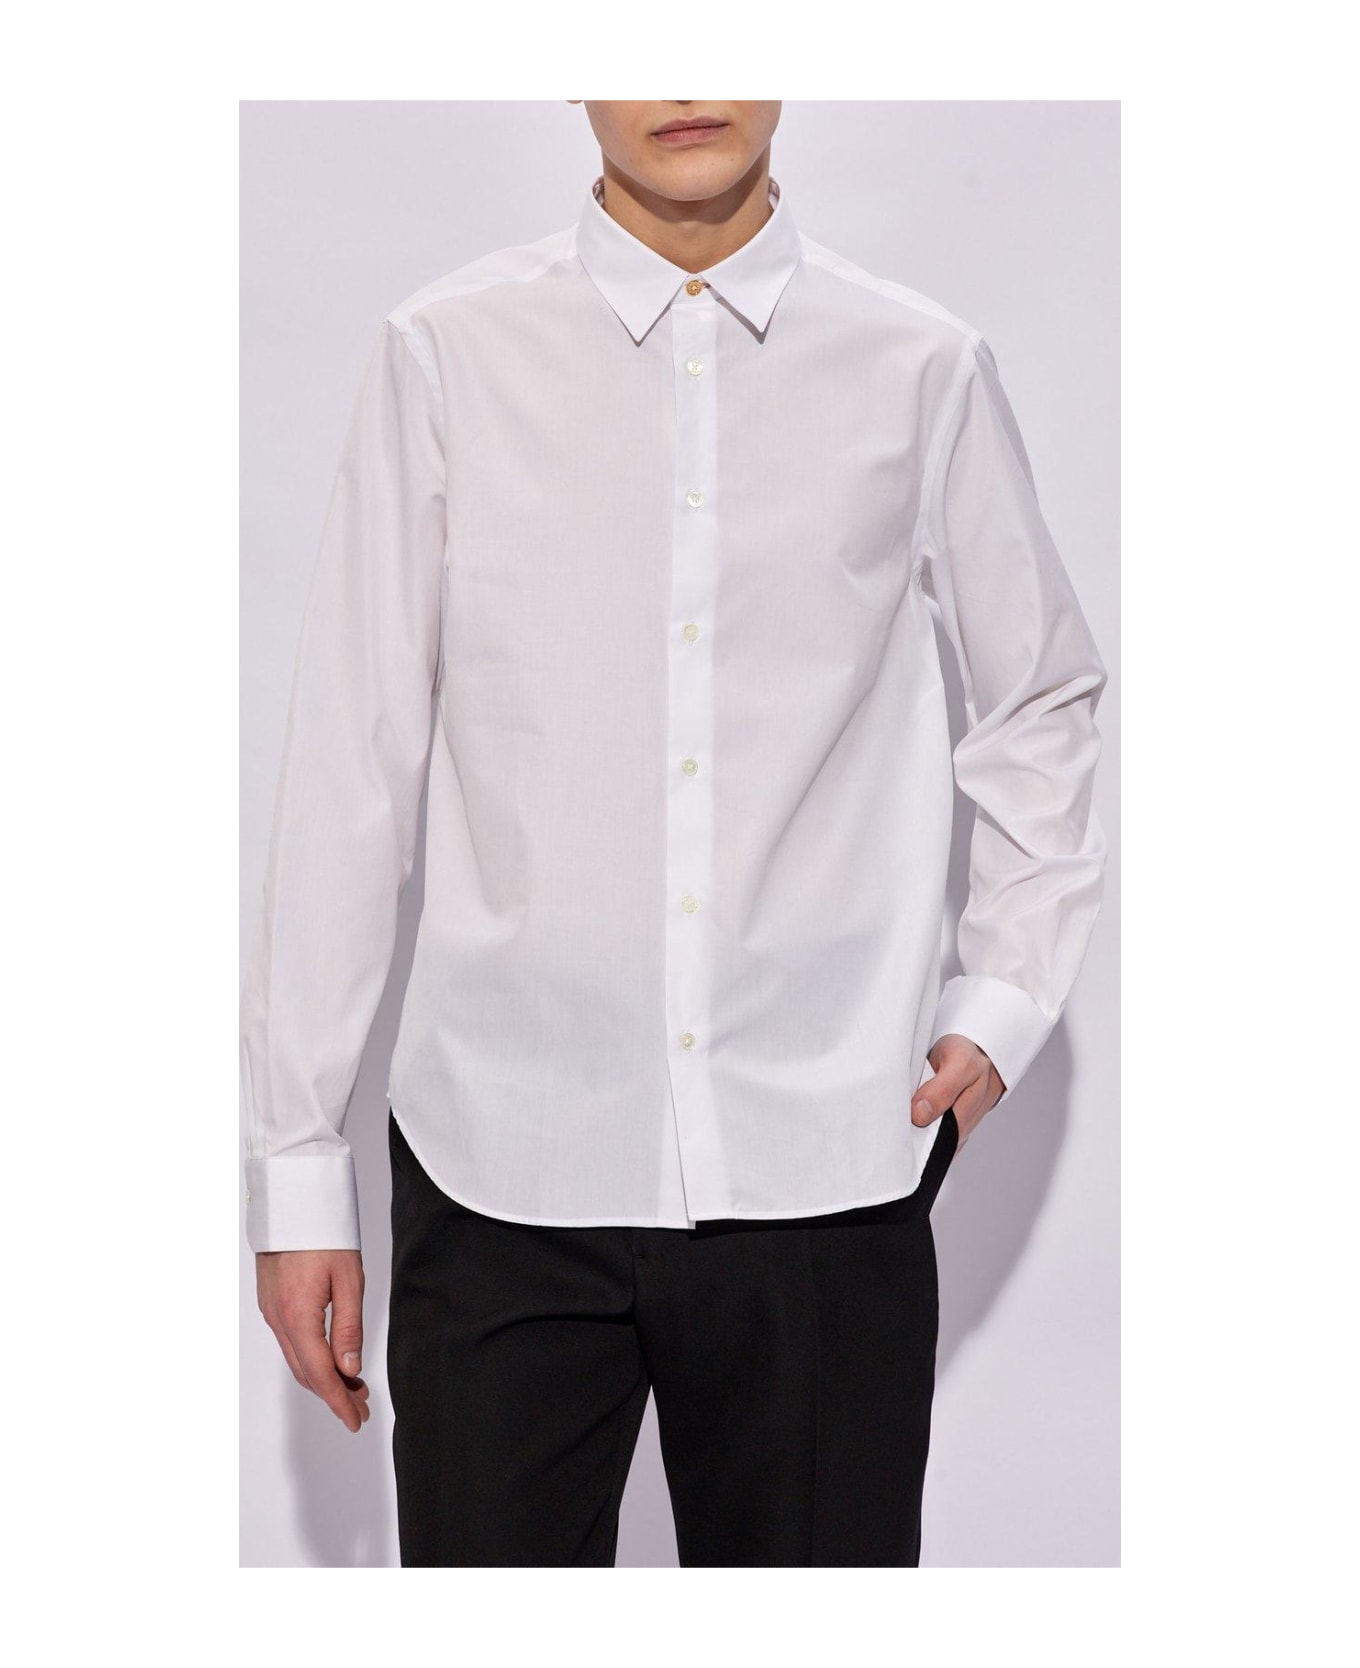 Paul Smith Tailored Shirt - Bianco シャツ